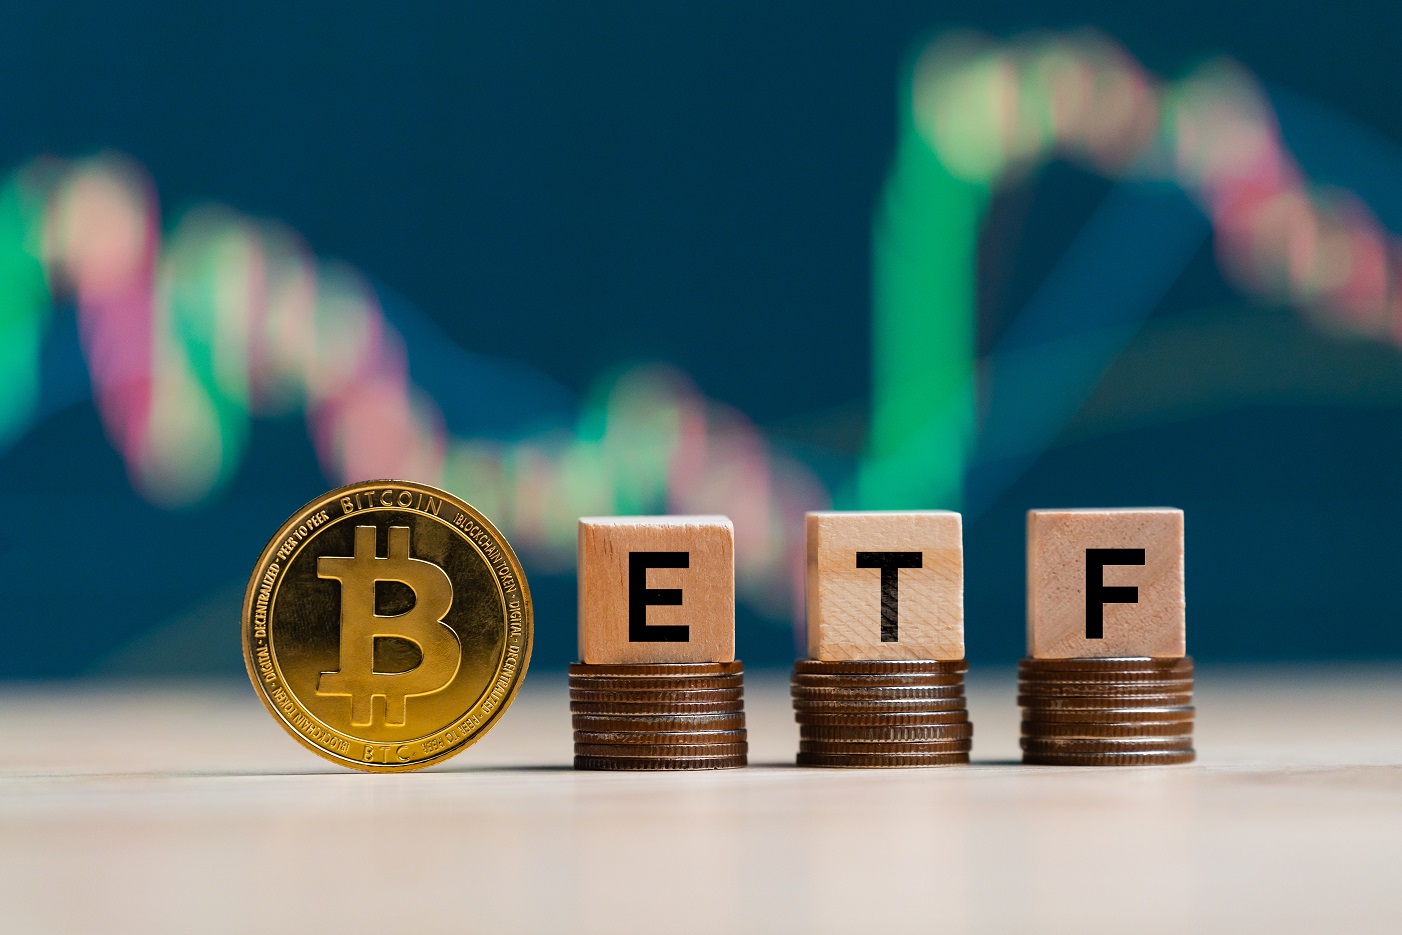 Bitcoin ETF price today, ETF to USD live price, marketcap and chart | CoinMarketCap